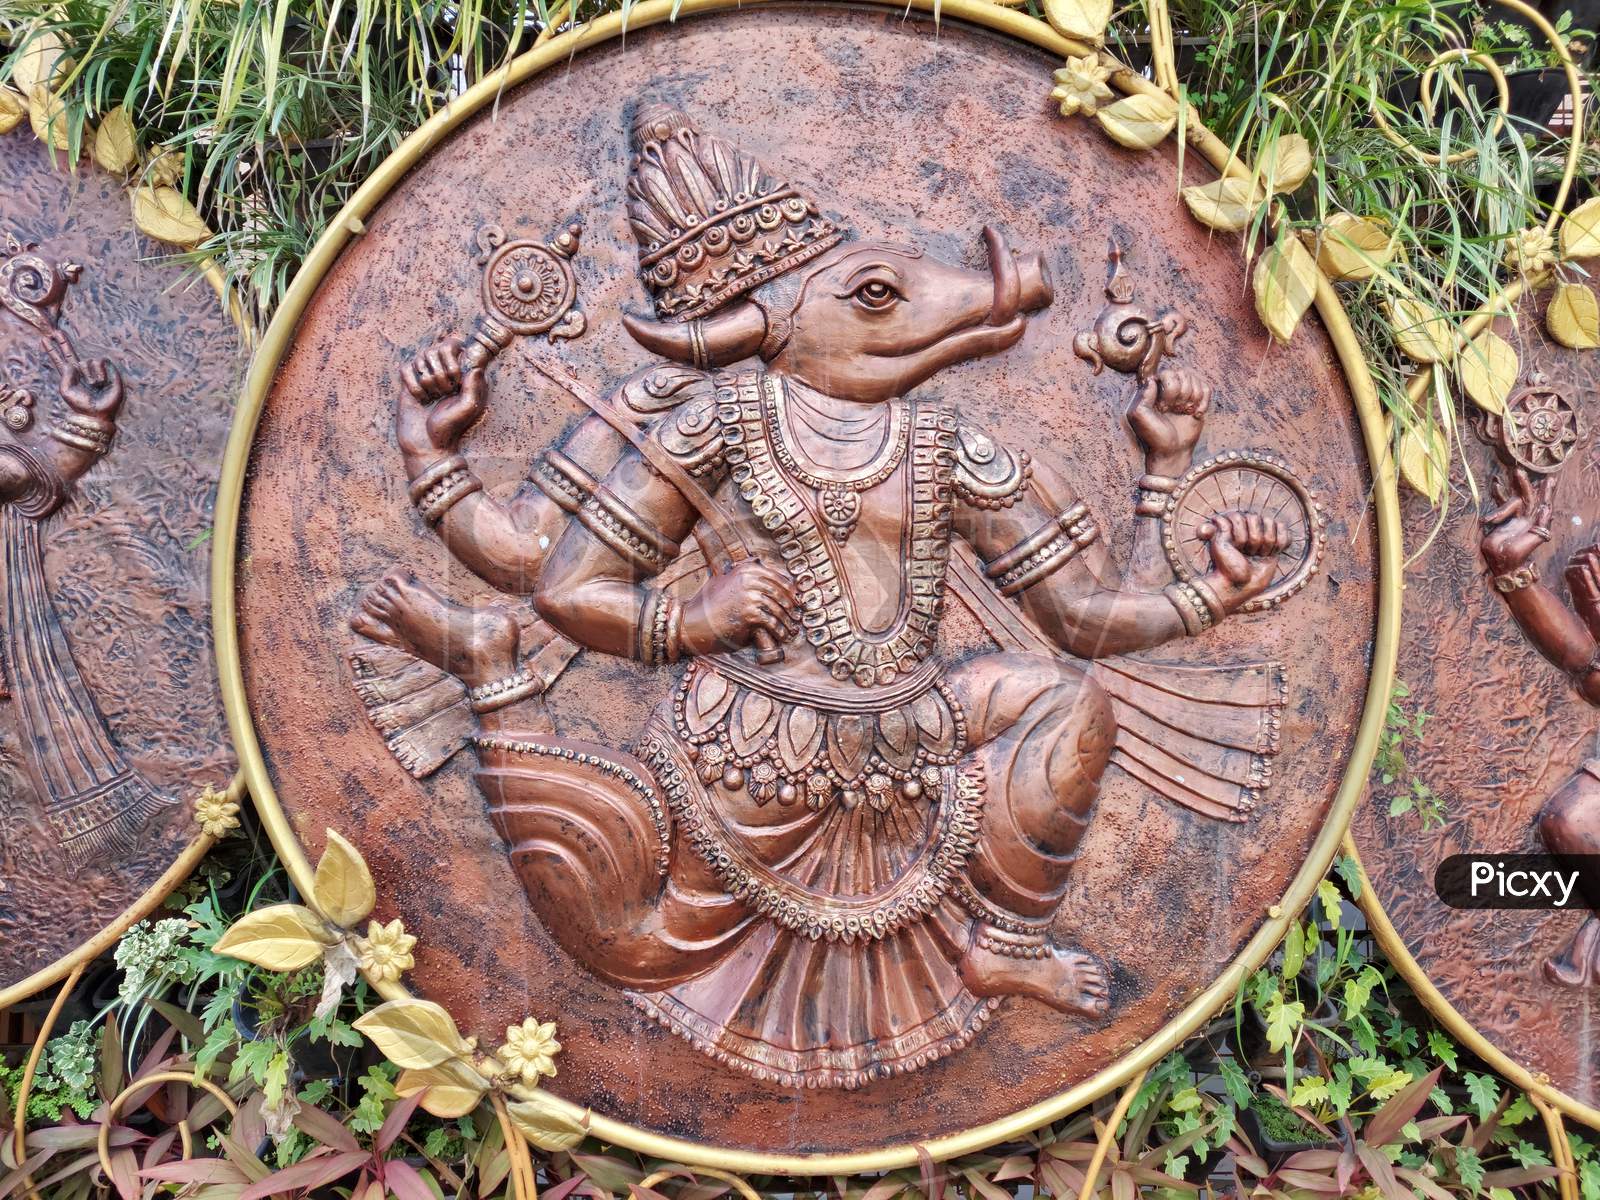 Sculptures at tirumala tirupati devasthanam temple. Hindu god sculpture.